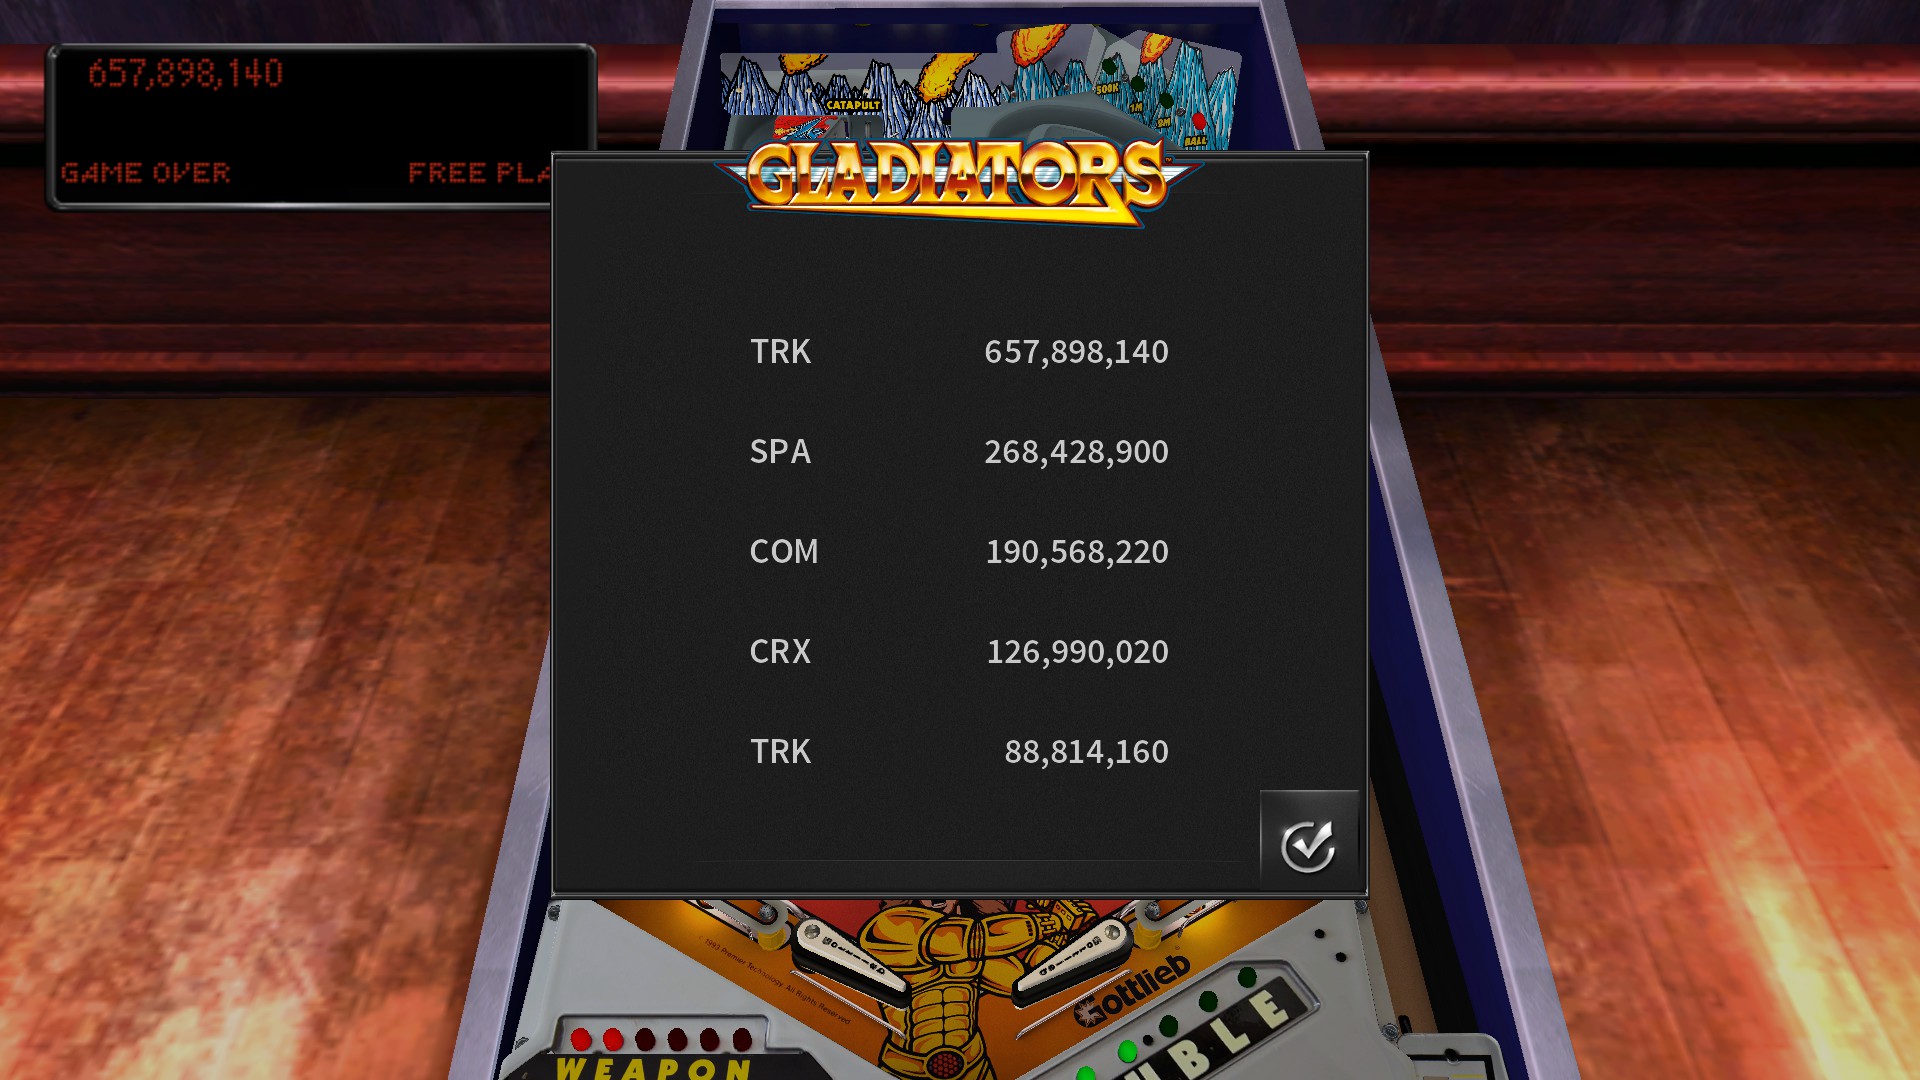 TheTrickster: Pinball Arcade: Gladiators (PC) 657,898,140 points on 2017-01-17 05:20:47